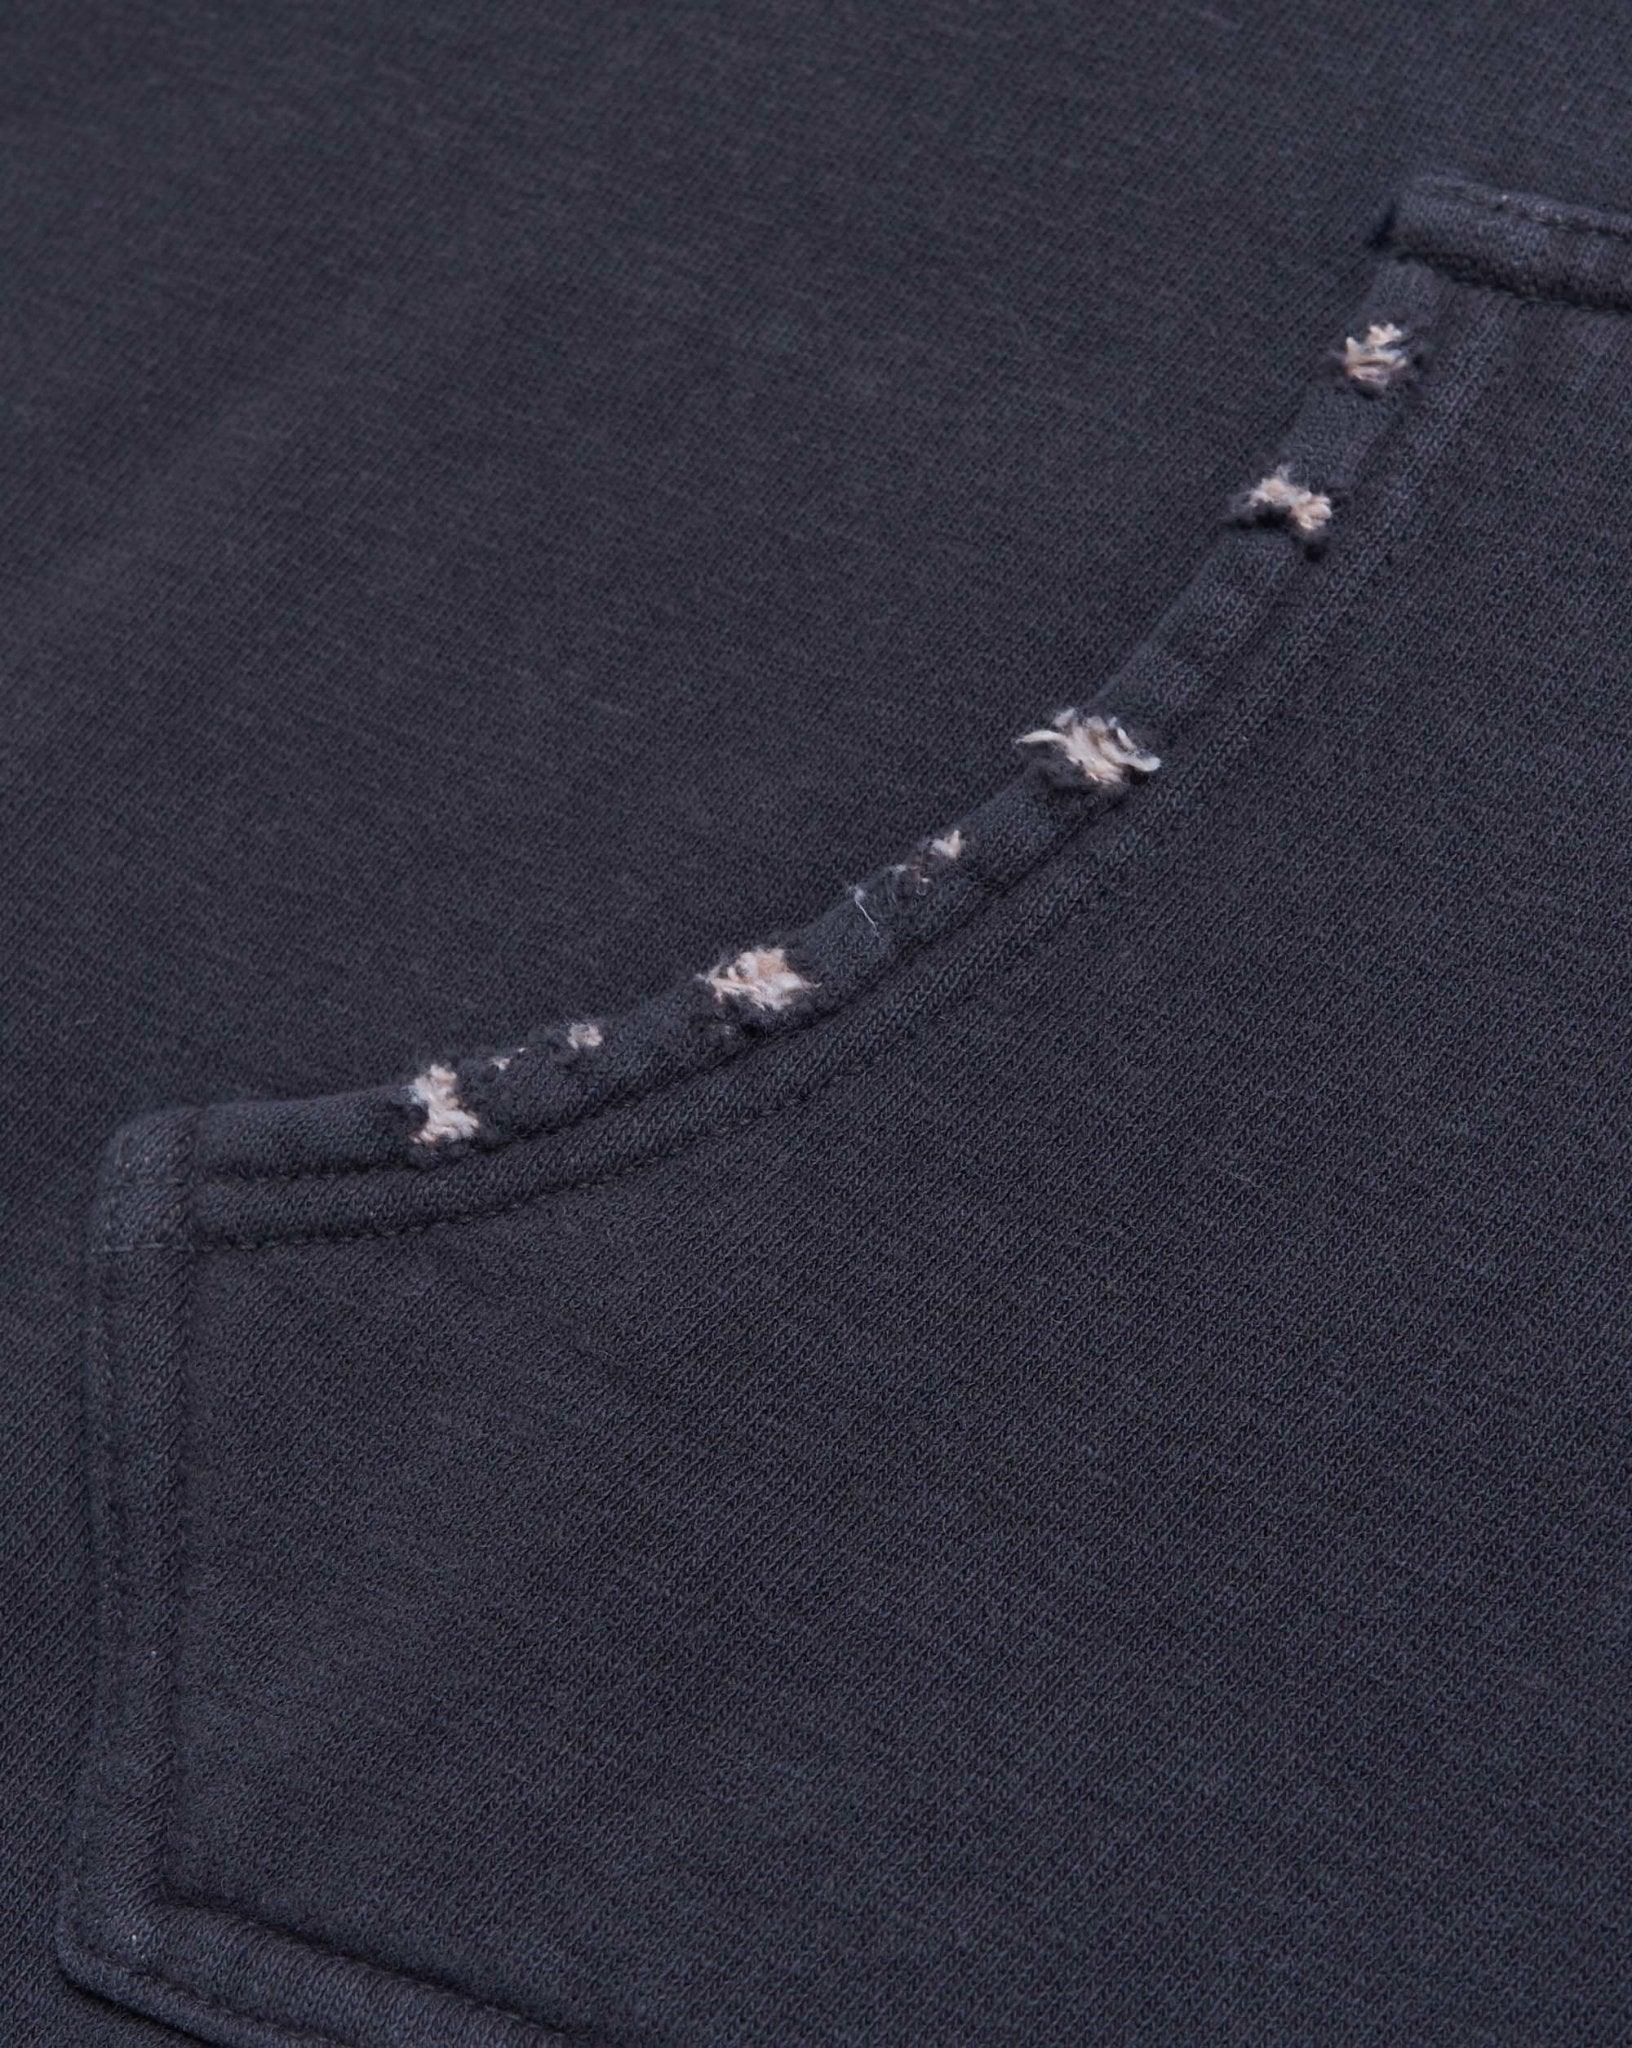 Fullcount After Hood Vintage Sweatshirt - Bronzed Black -Fullcount - URAHARA